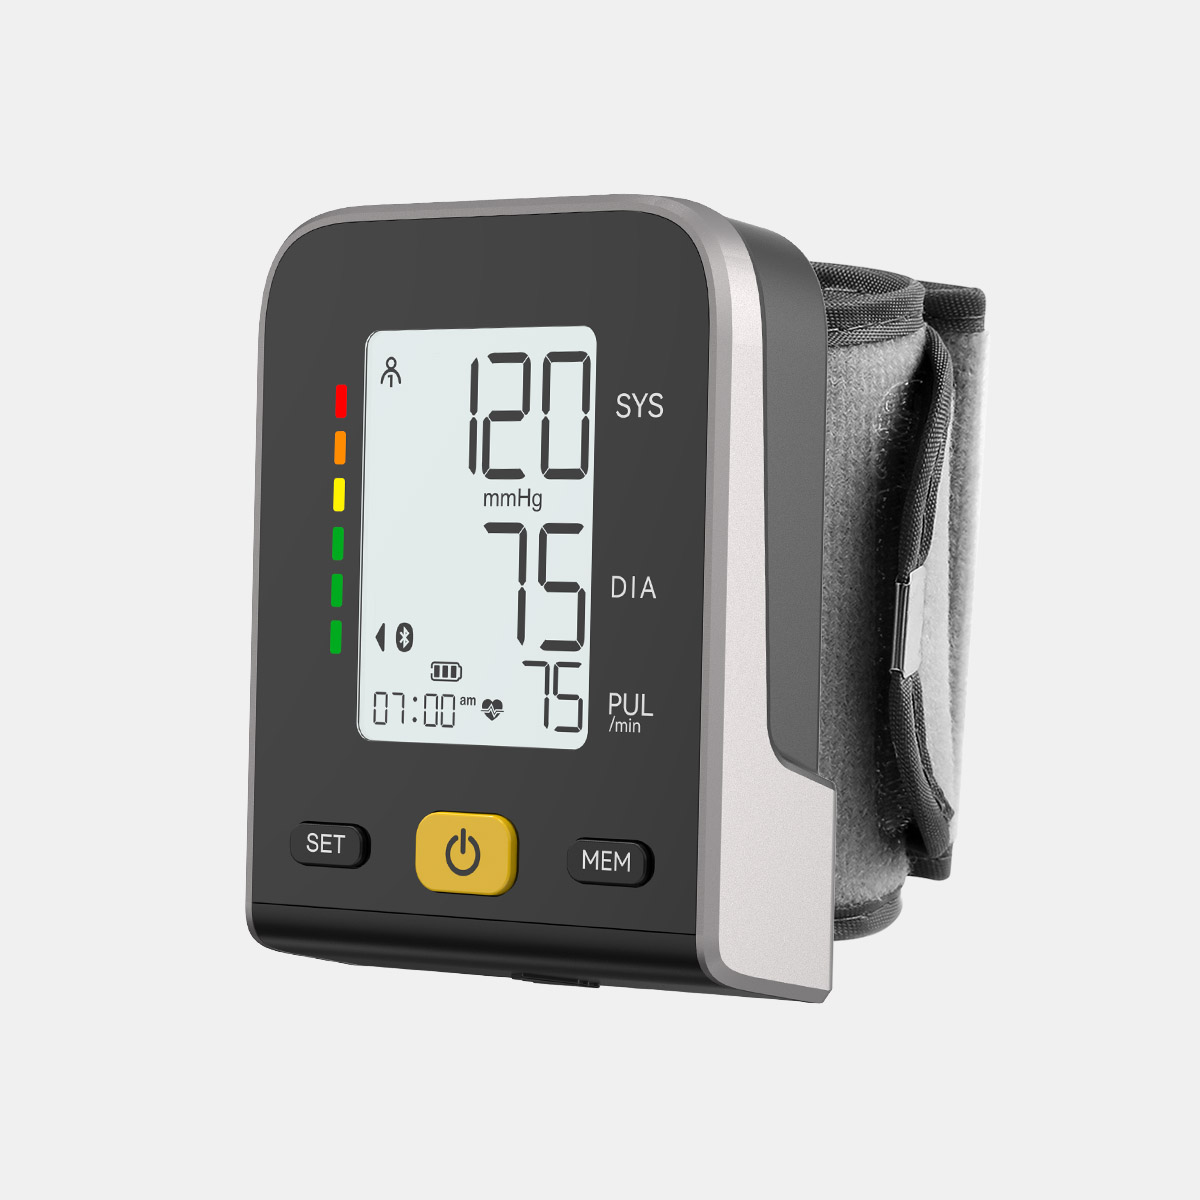 Zdravstvena skrb MDR CE odobren digitalni mjerač krvnog tlaka zapešće Bluetooth